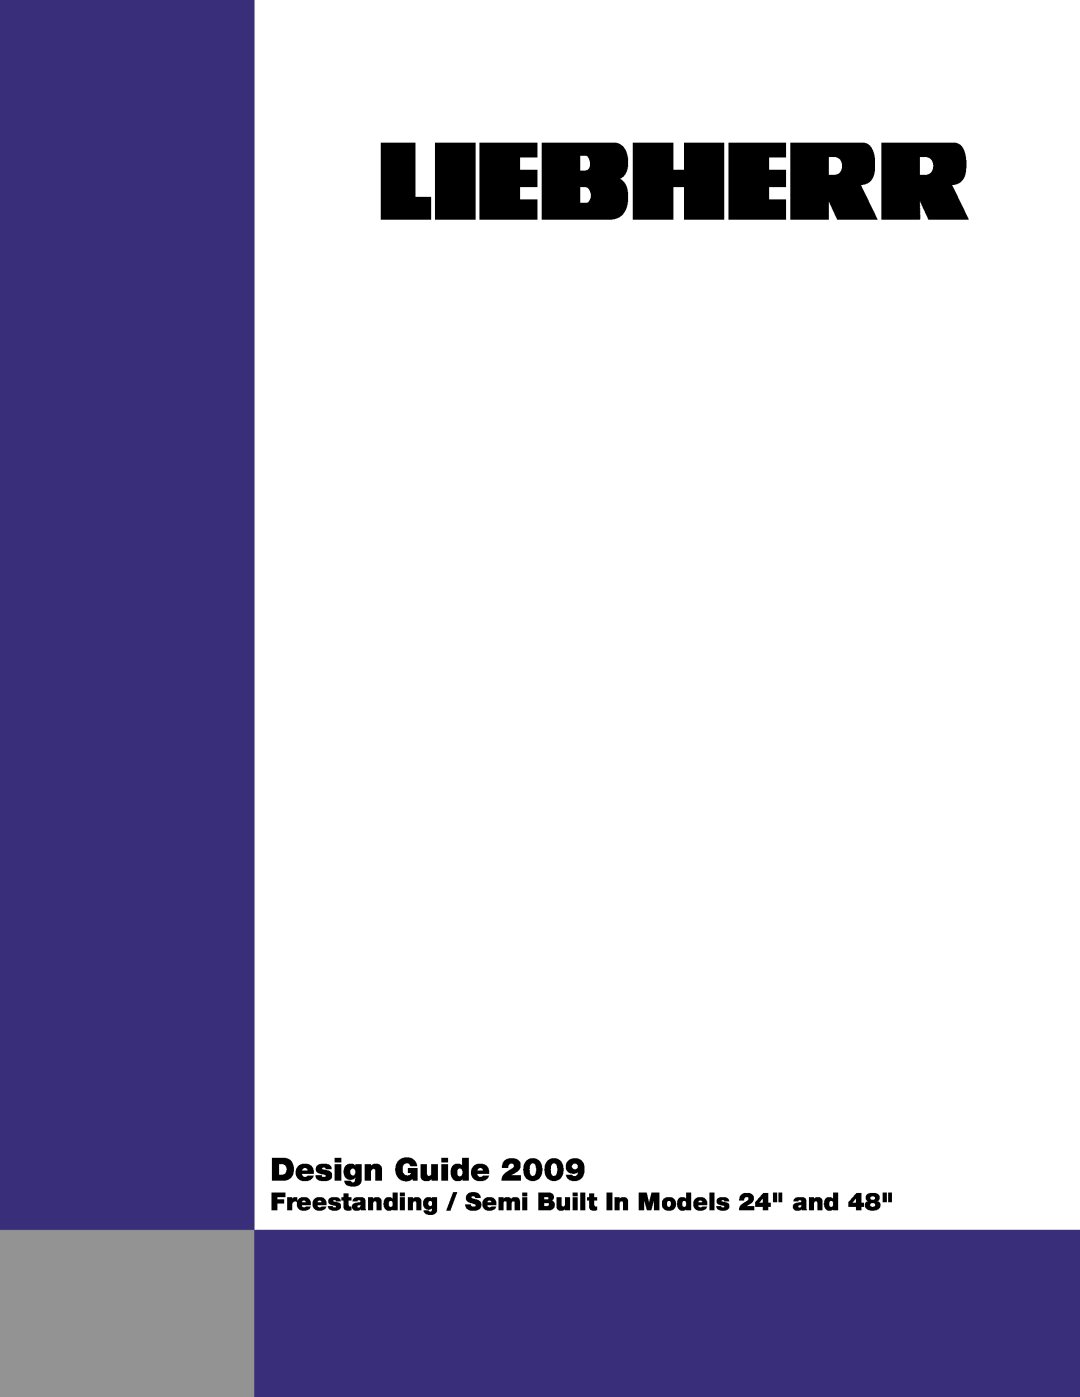 Liebherr 48 manual Design Guide, Freestanding / Semi Built In Models 24 and 